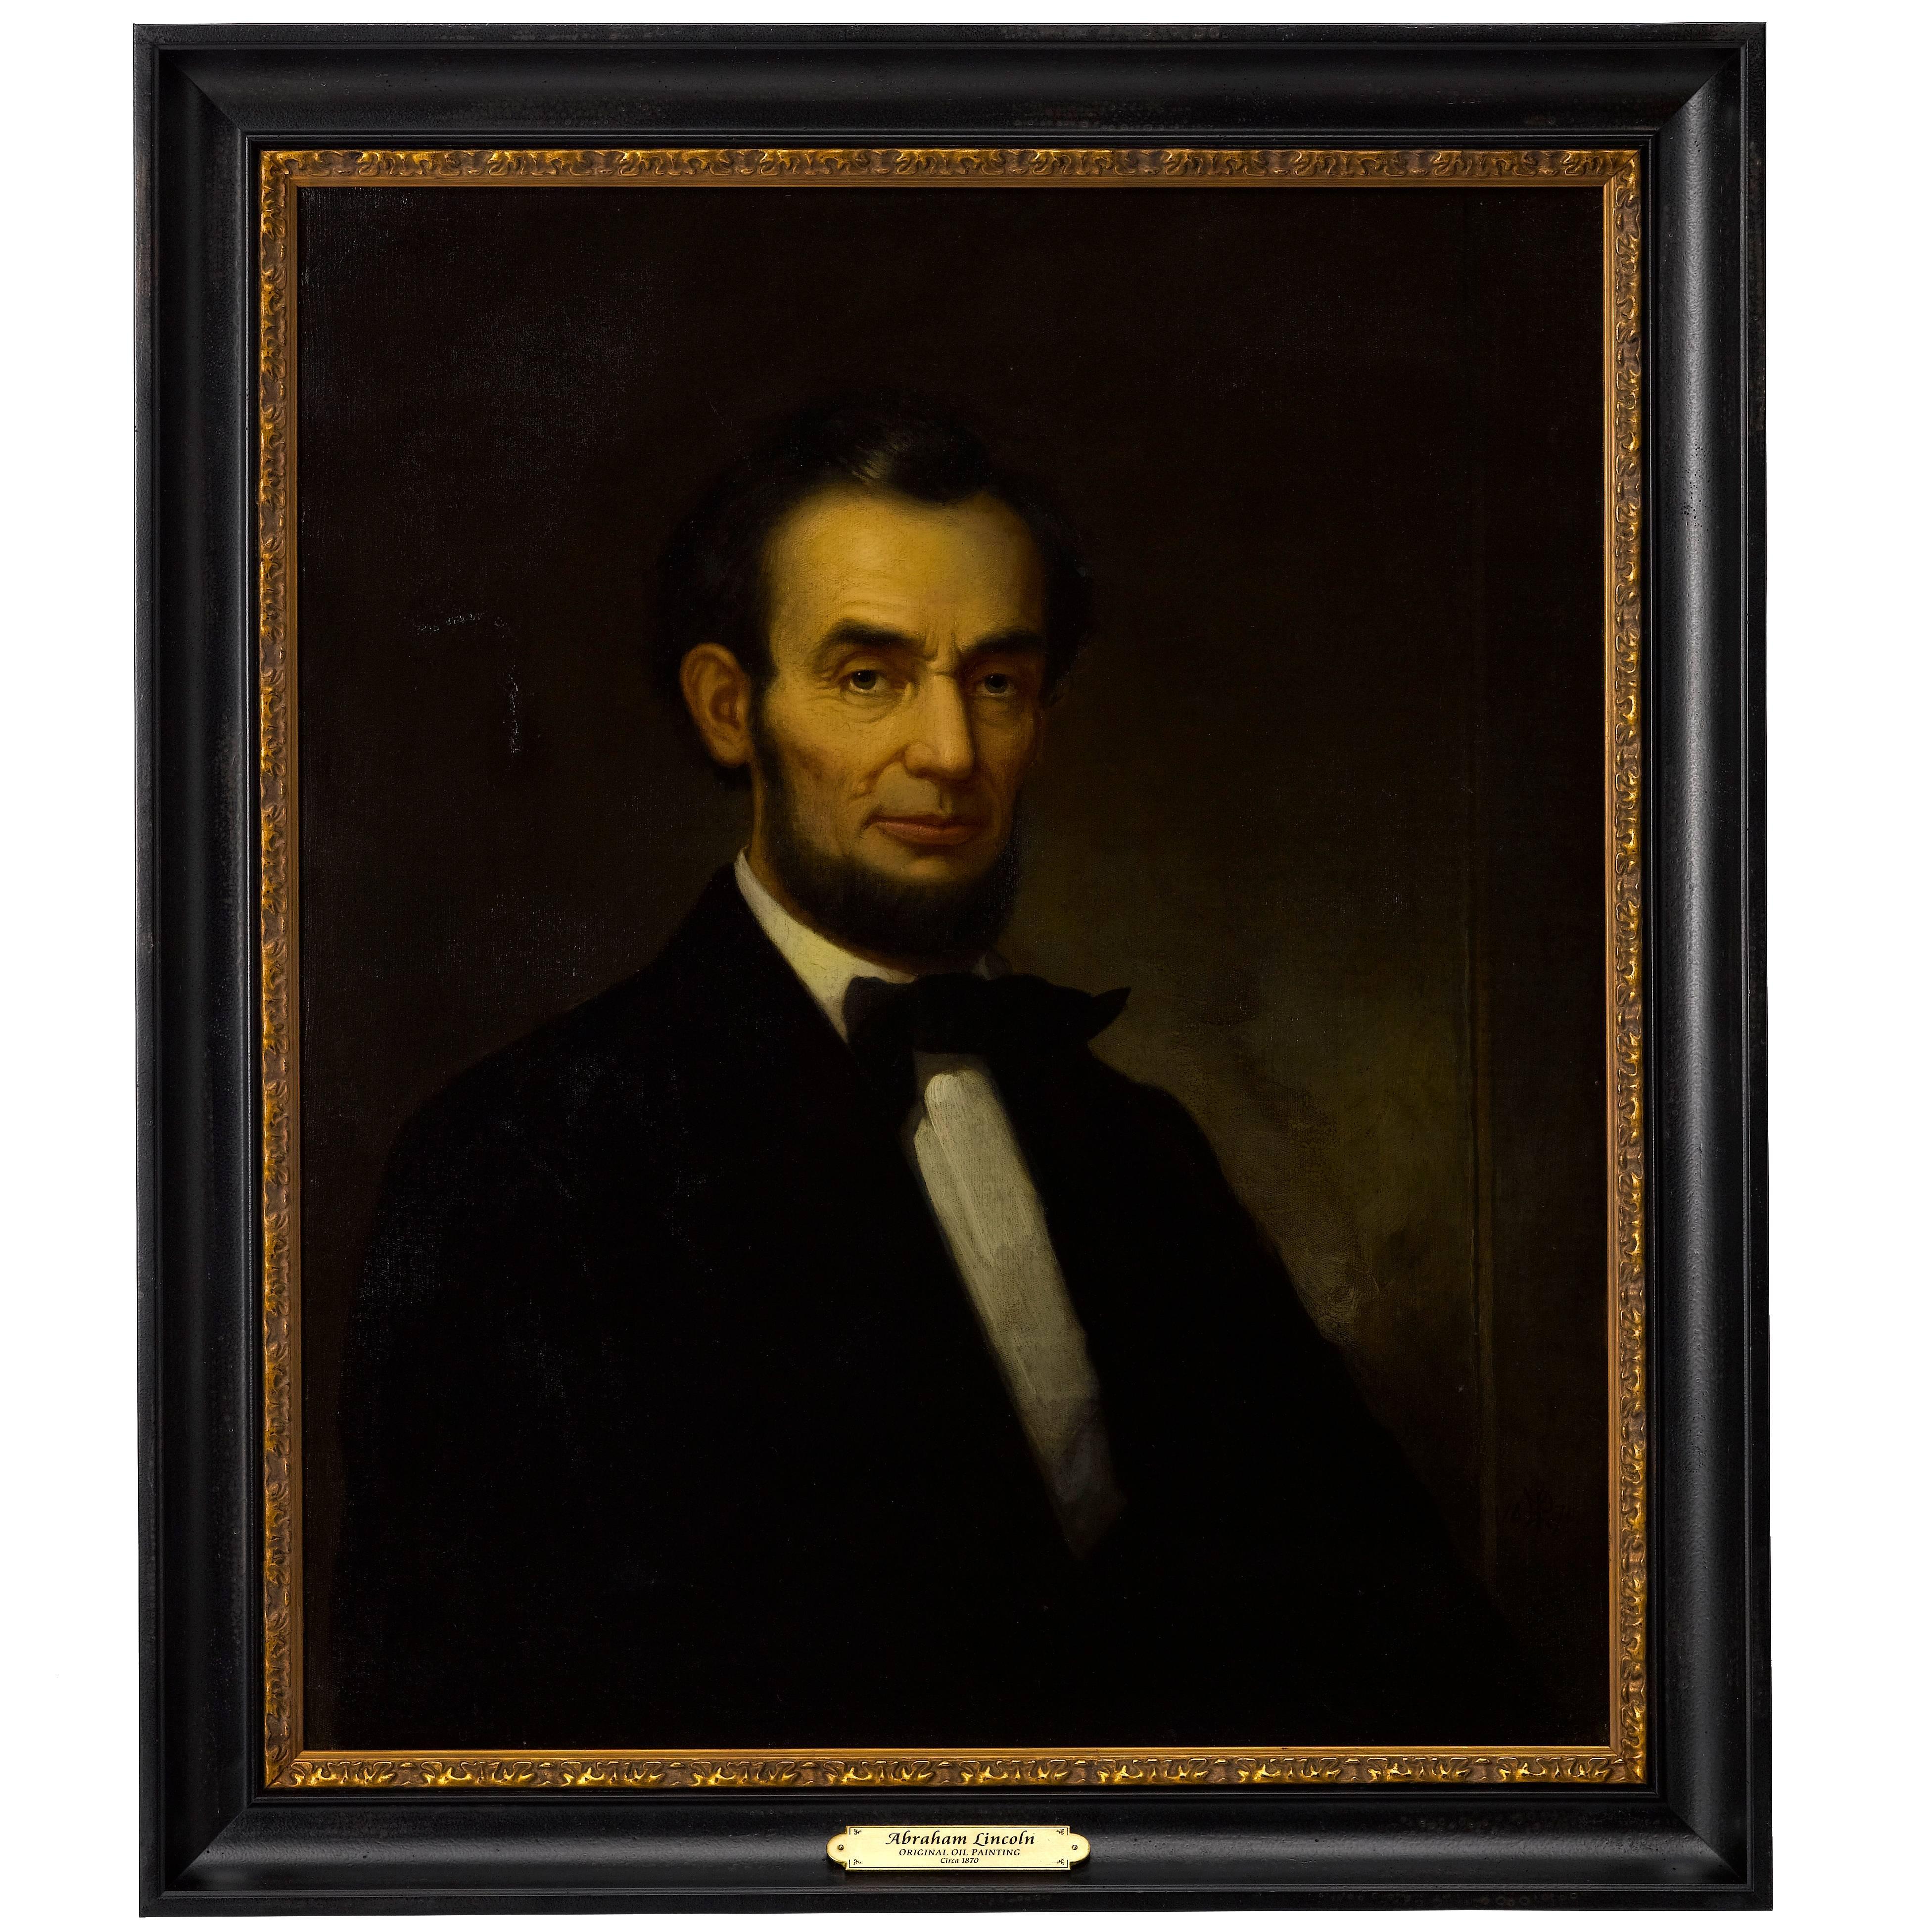 Abraham Lincoln Antique Portrait, Oil on Canvas, circa 1870